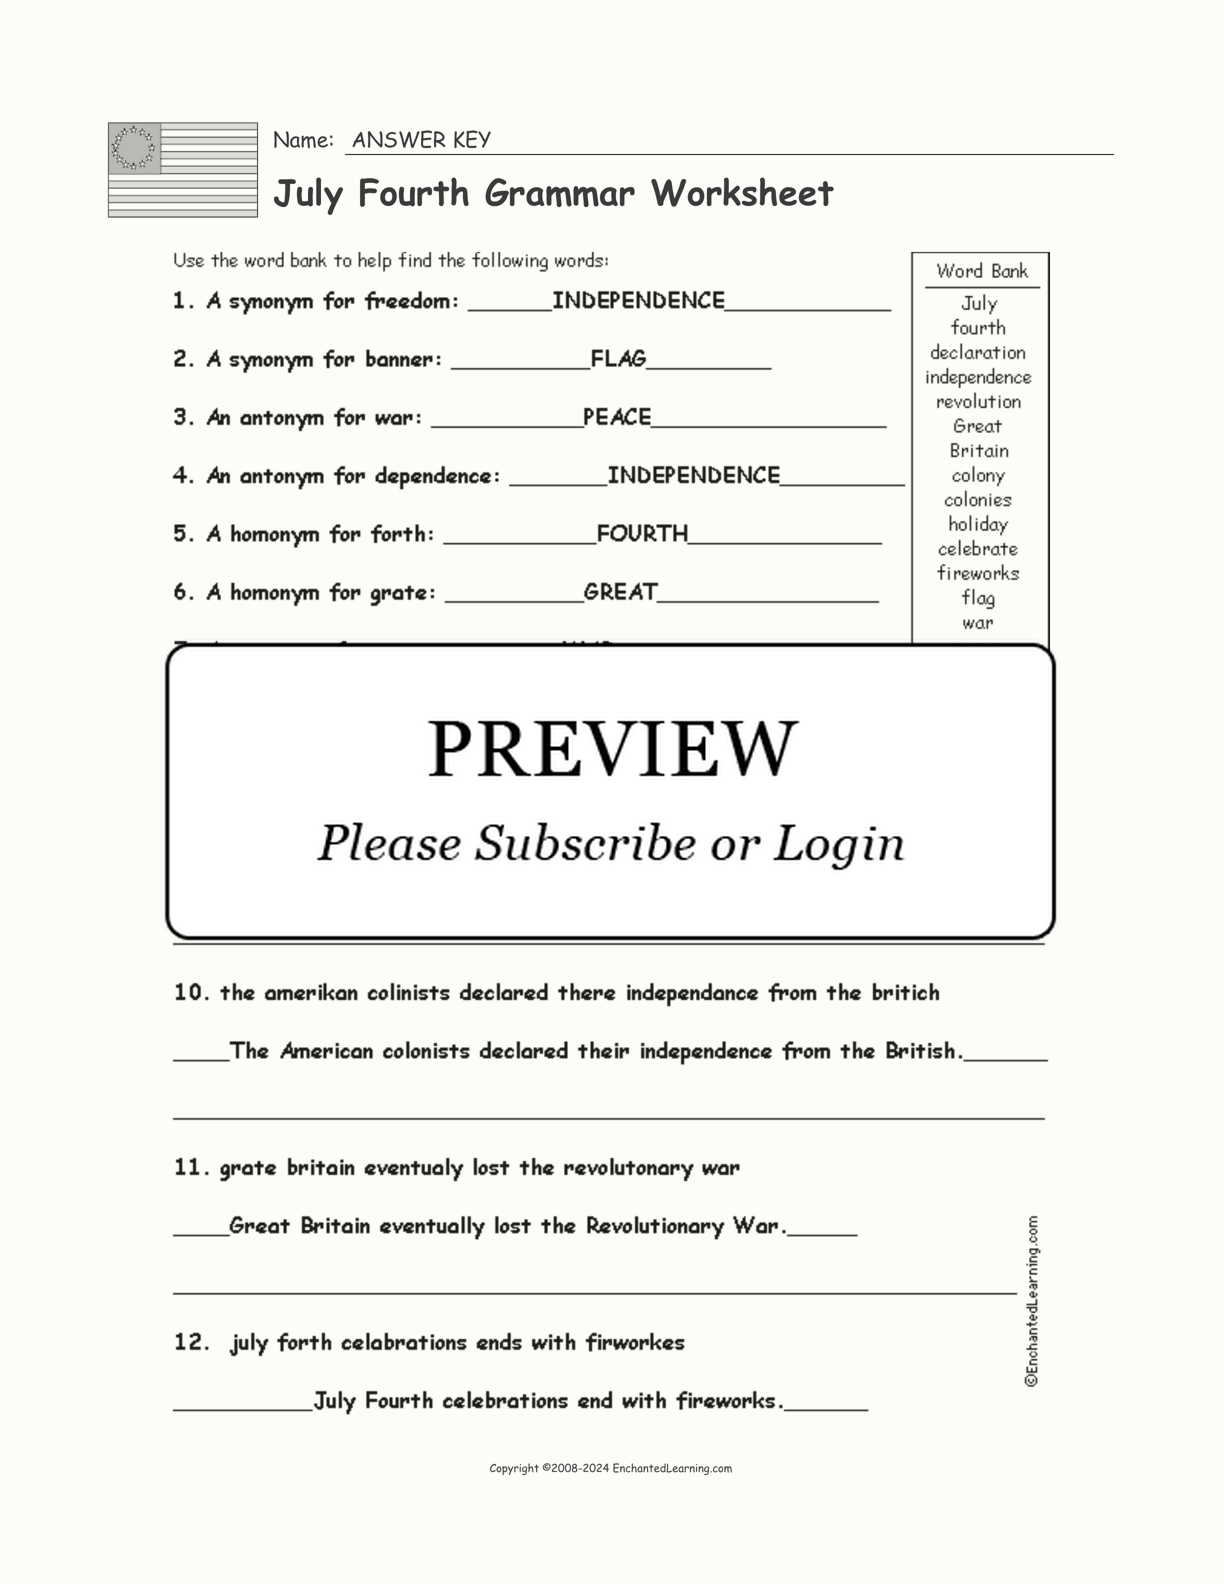 July Fourth Grammar Worksheet interactive worksheet page 2